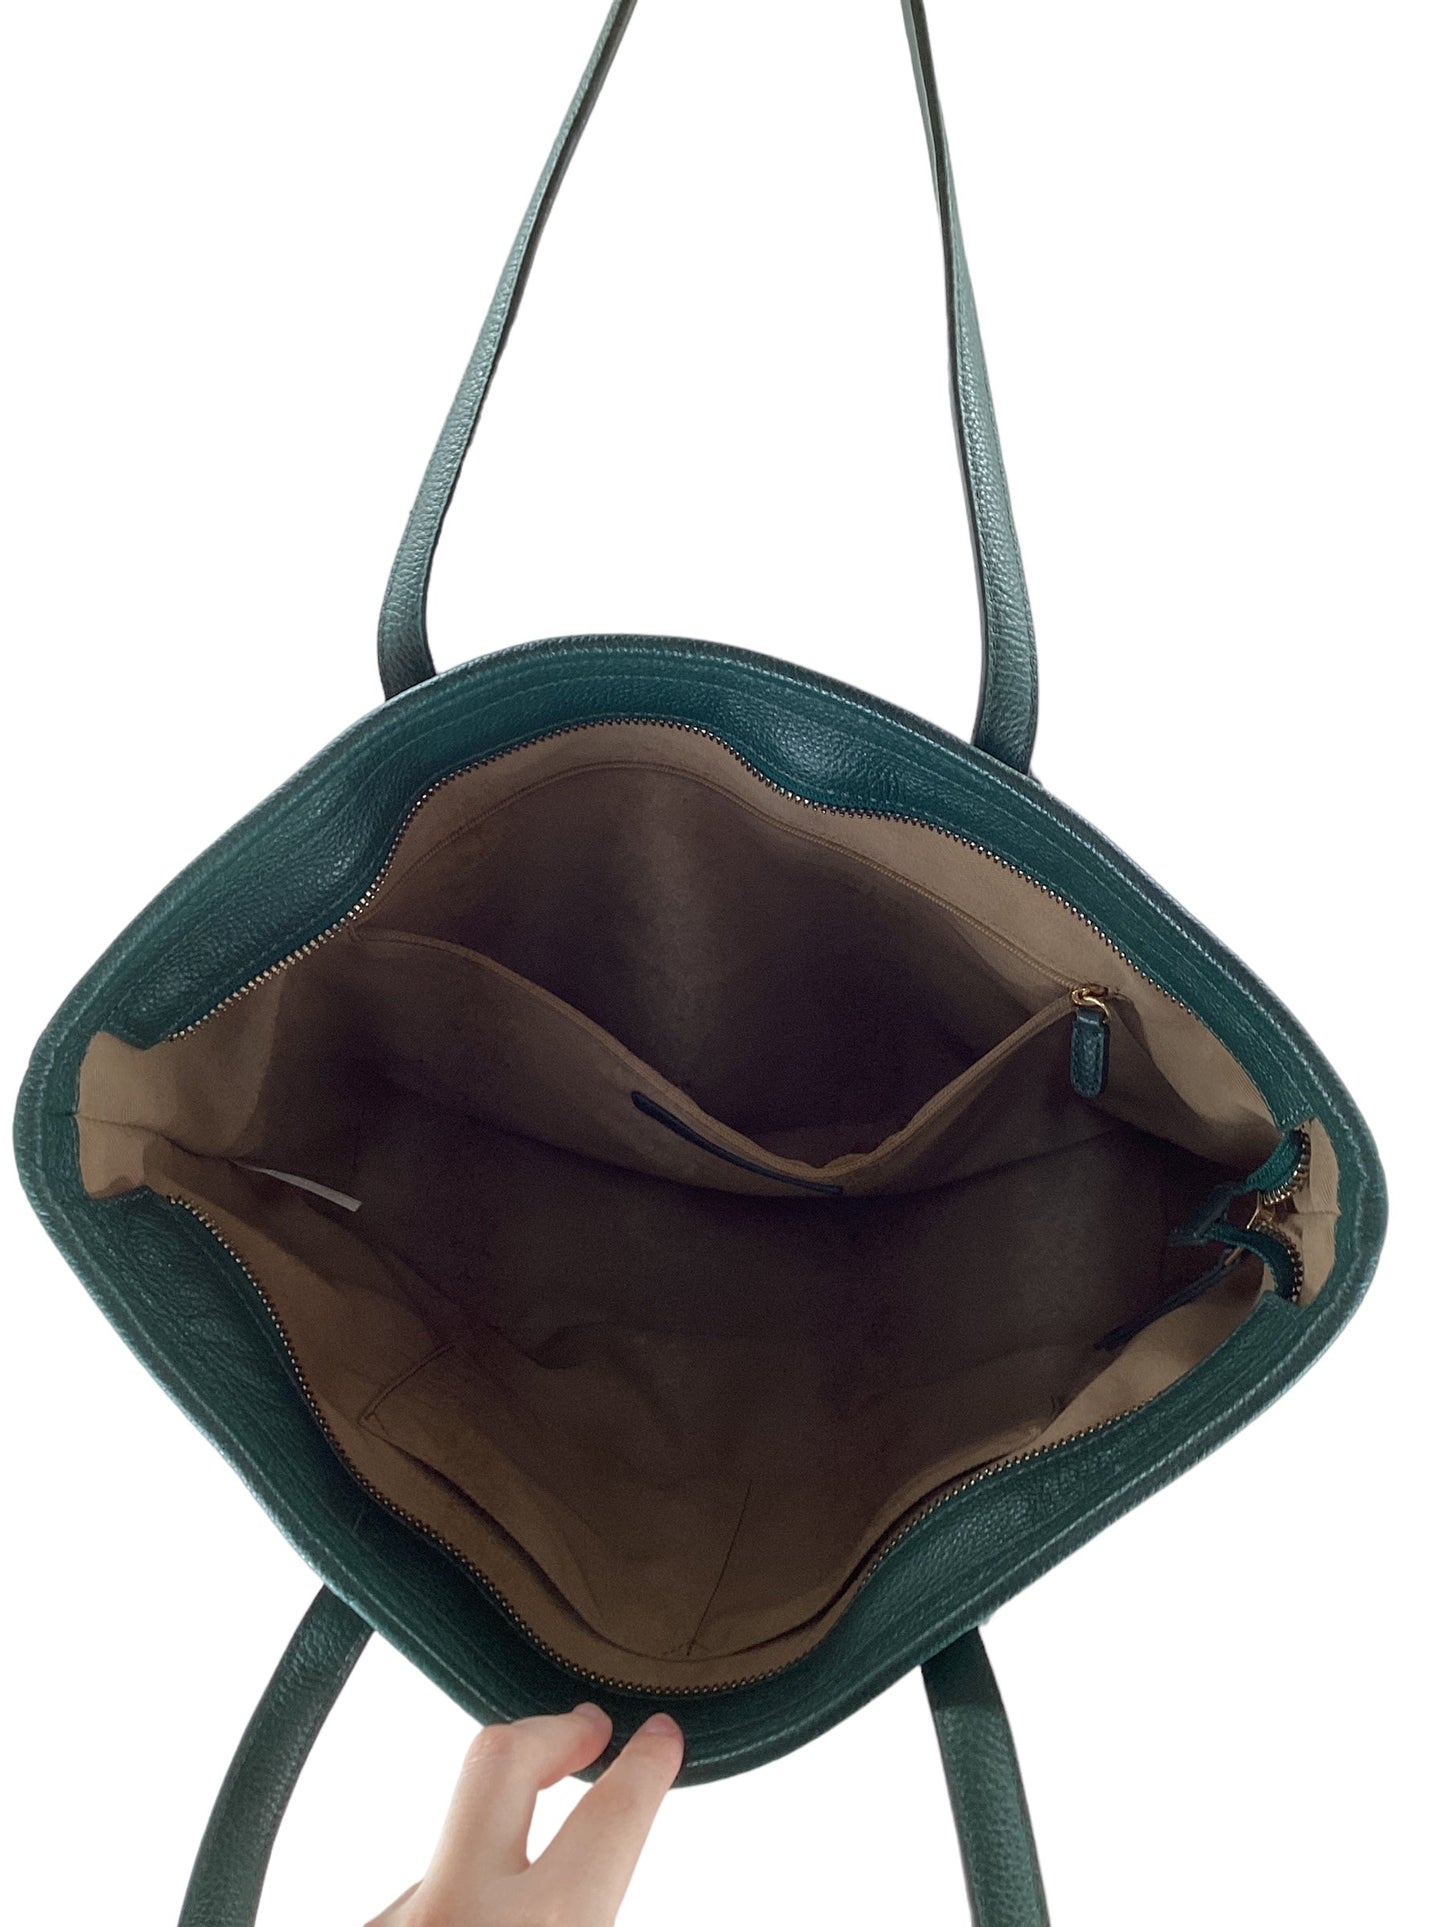 Handbag By Talbots  Size: Large